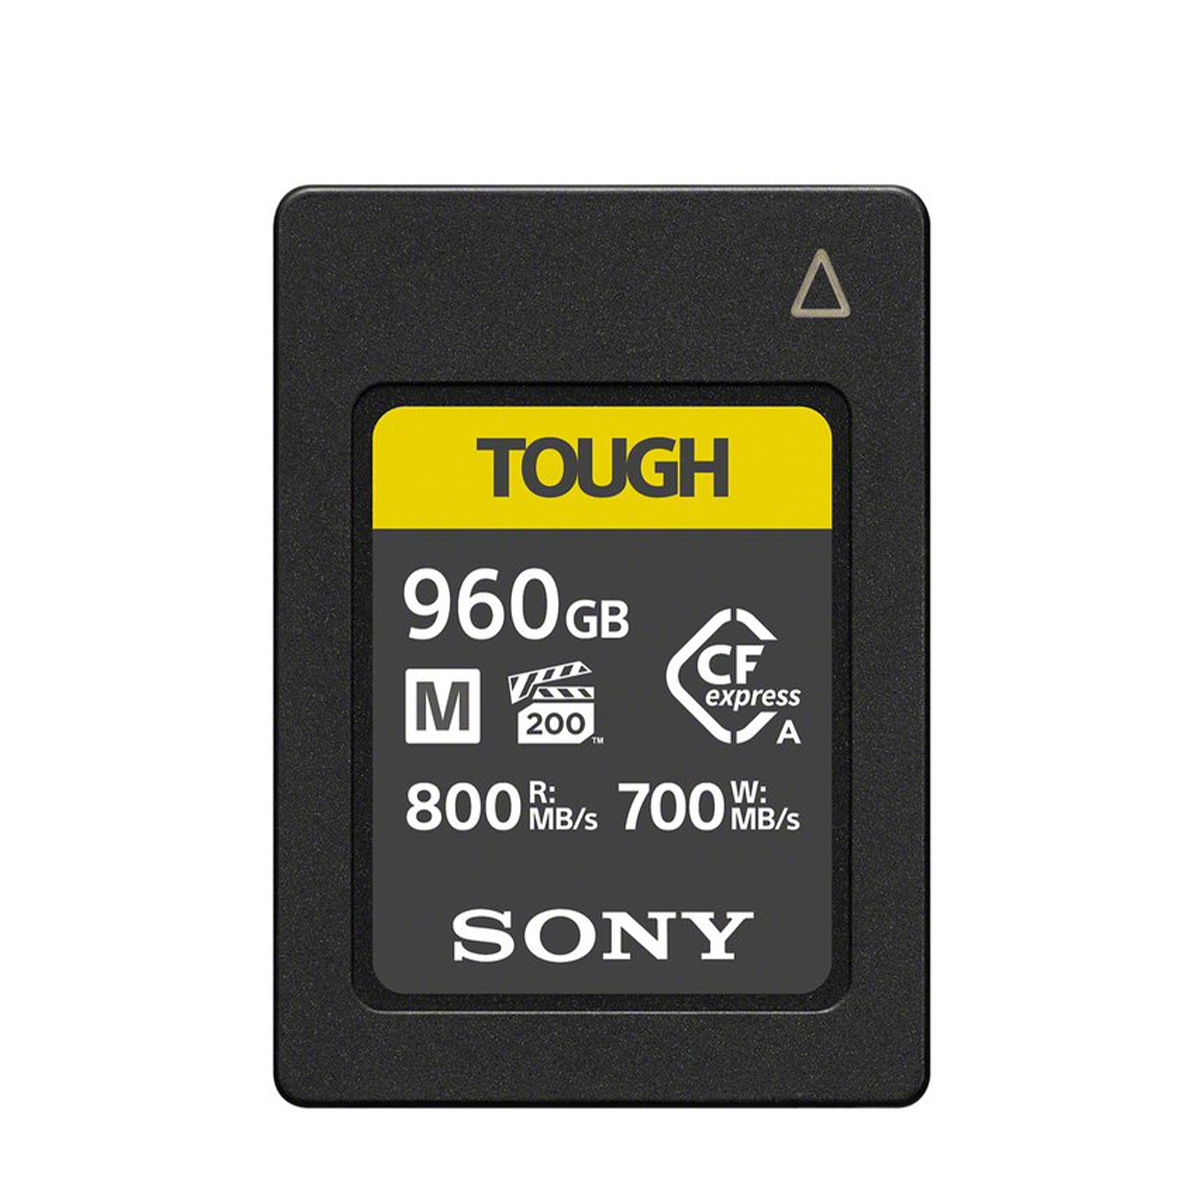 Sony 960 GB CFexpress Tough G Typ A Speicherkarte